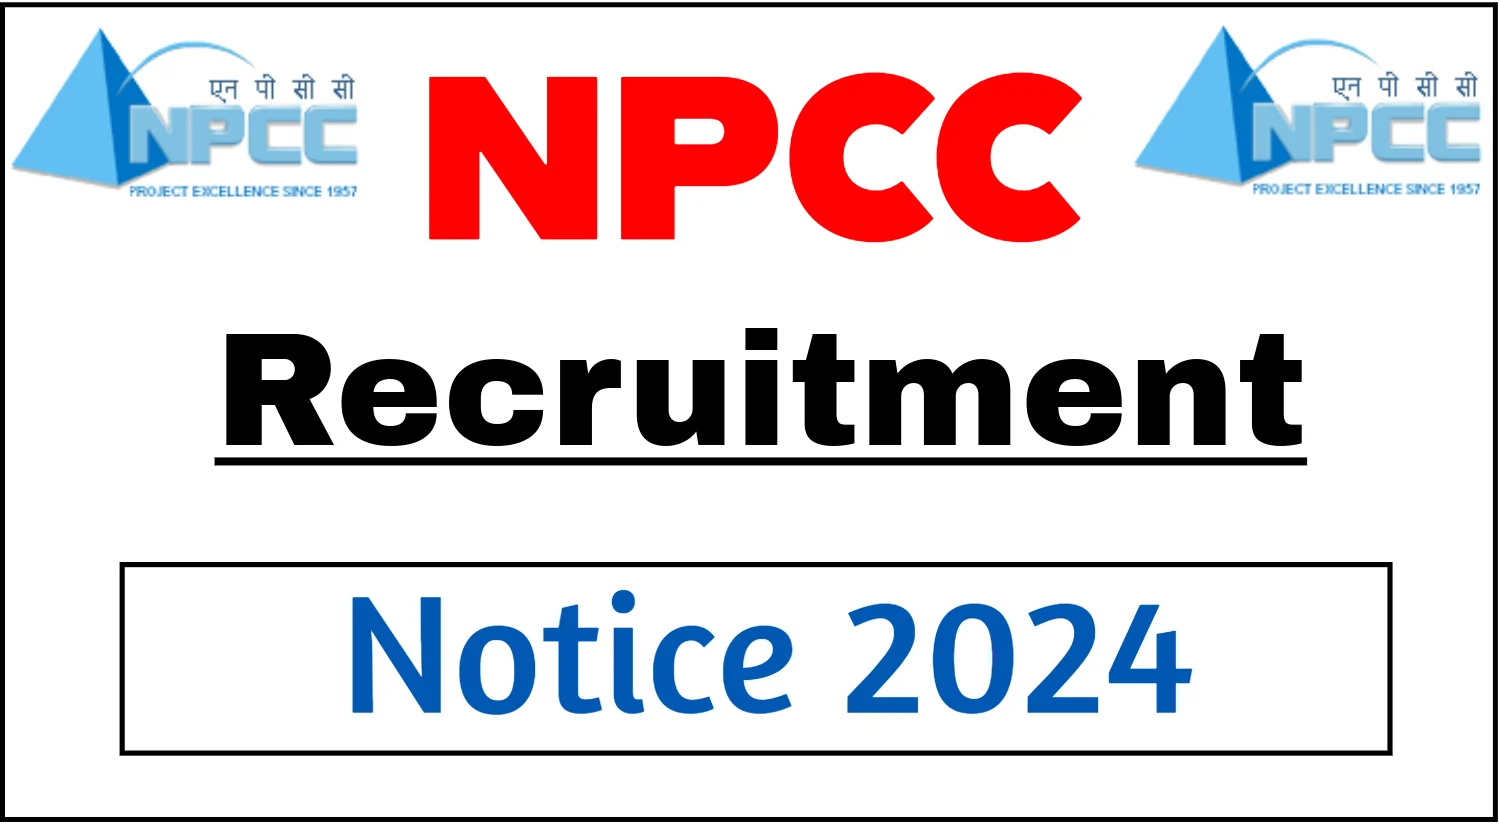 NPCC Recruitment 2024